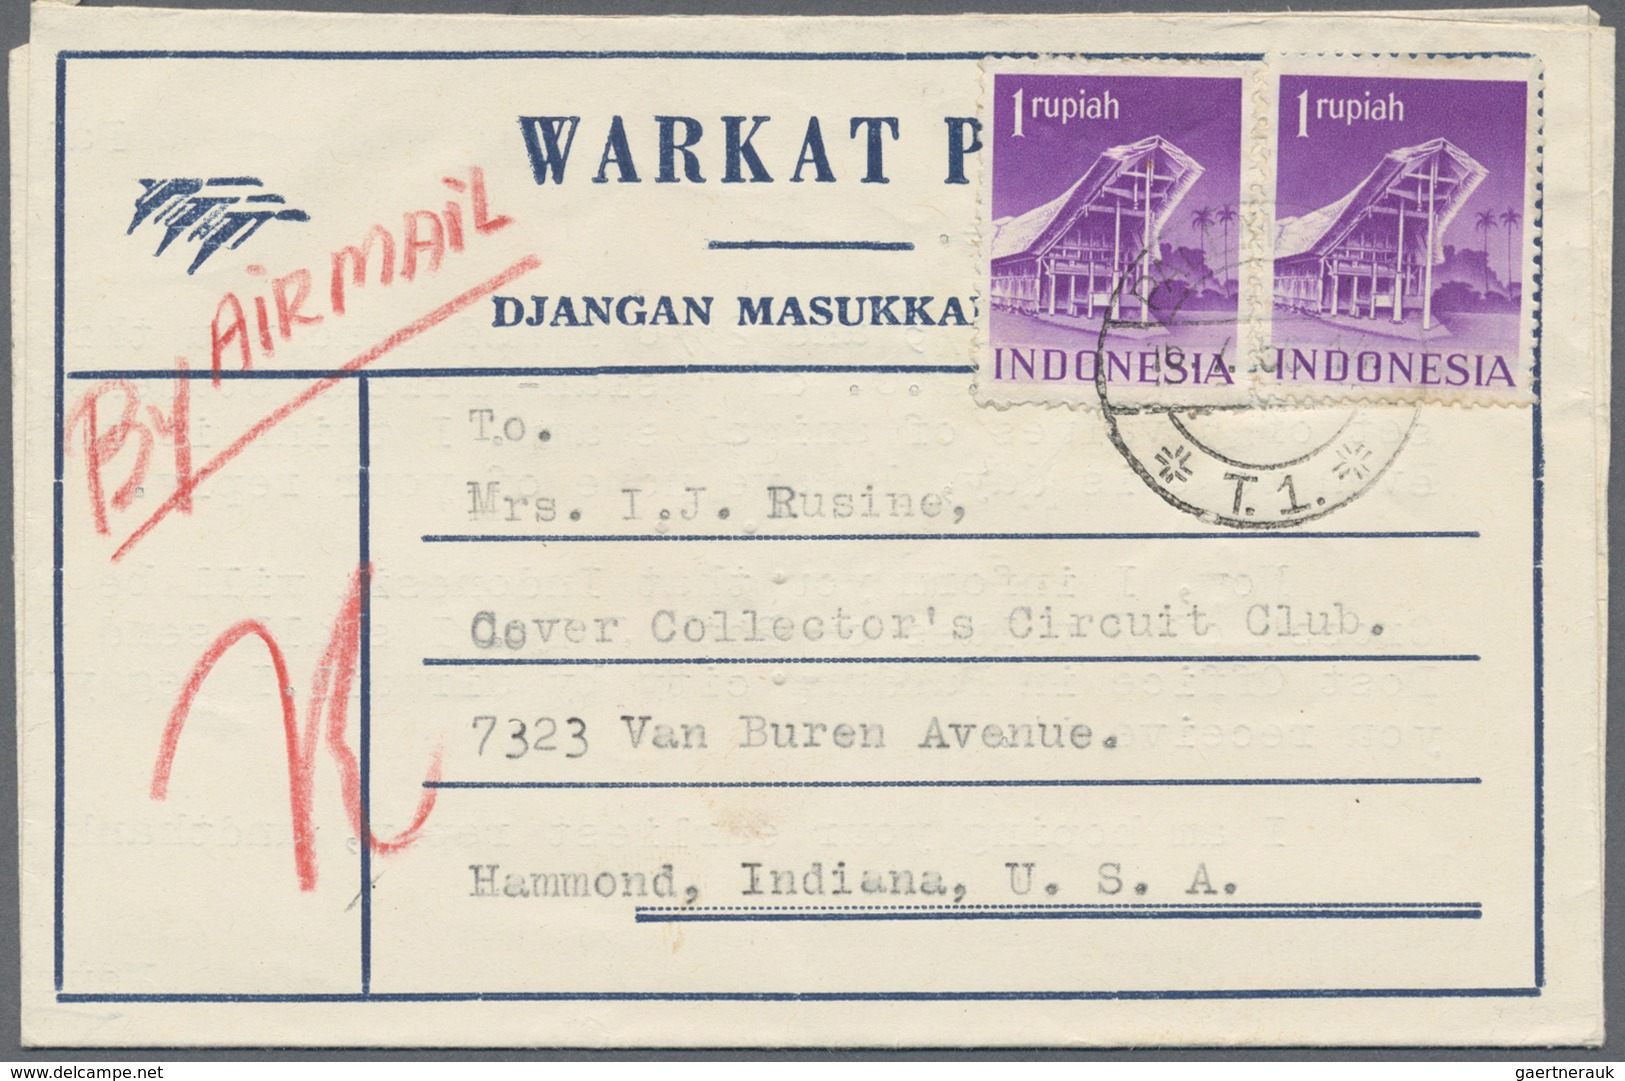 GA Indonesien: 1949/97 (ca.), stationery envelopes (warkat pos / postblad) specialized stock: 10 S. (mi